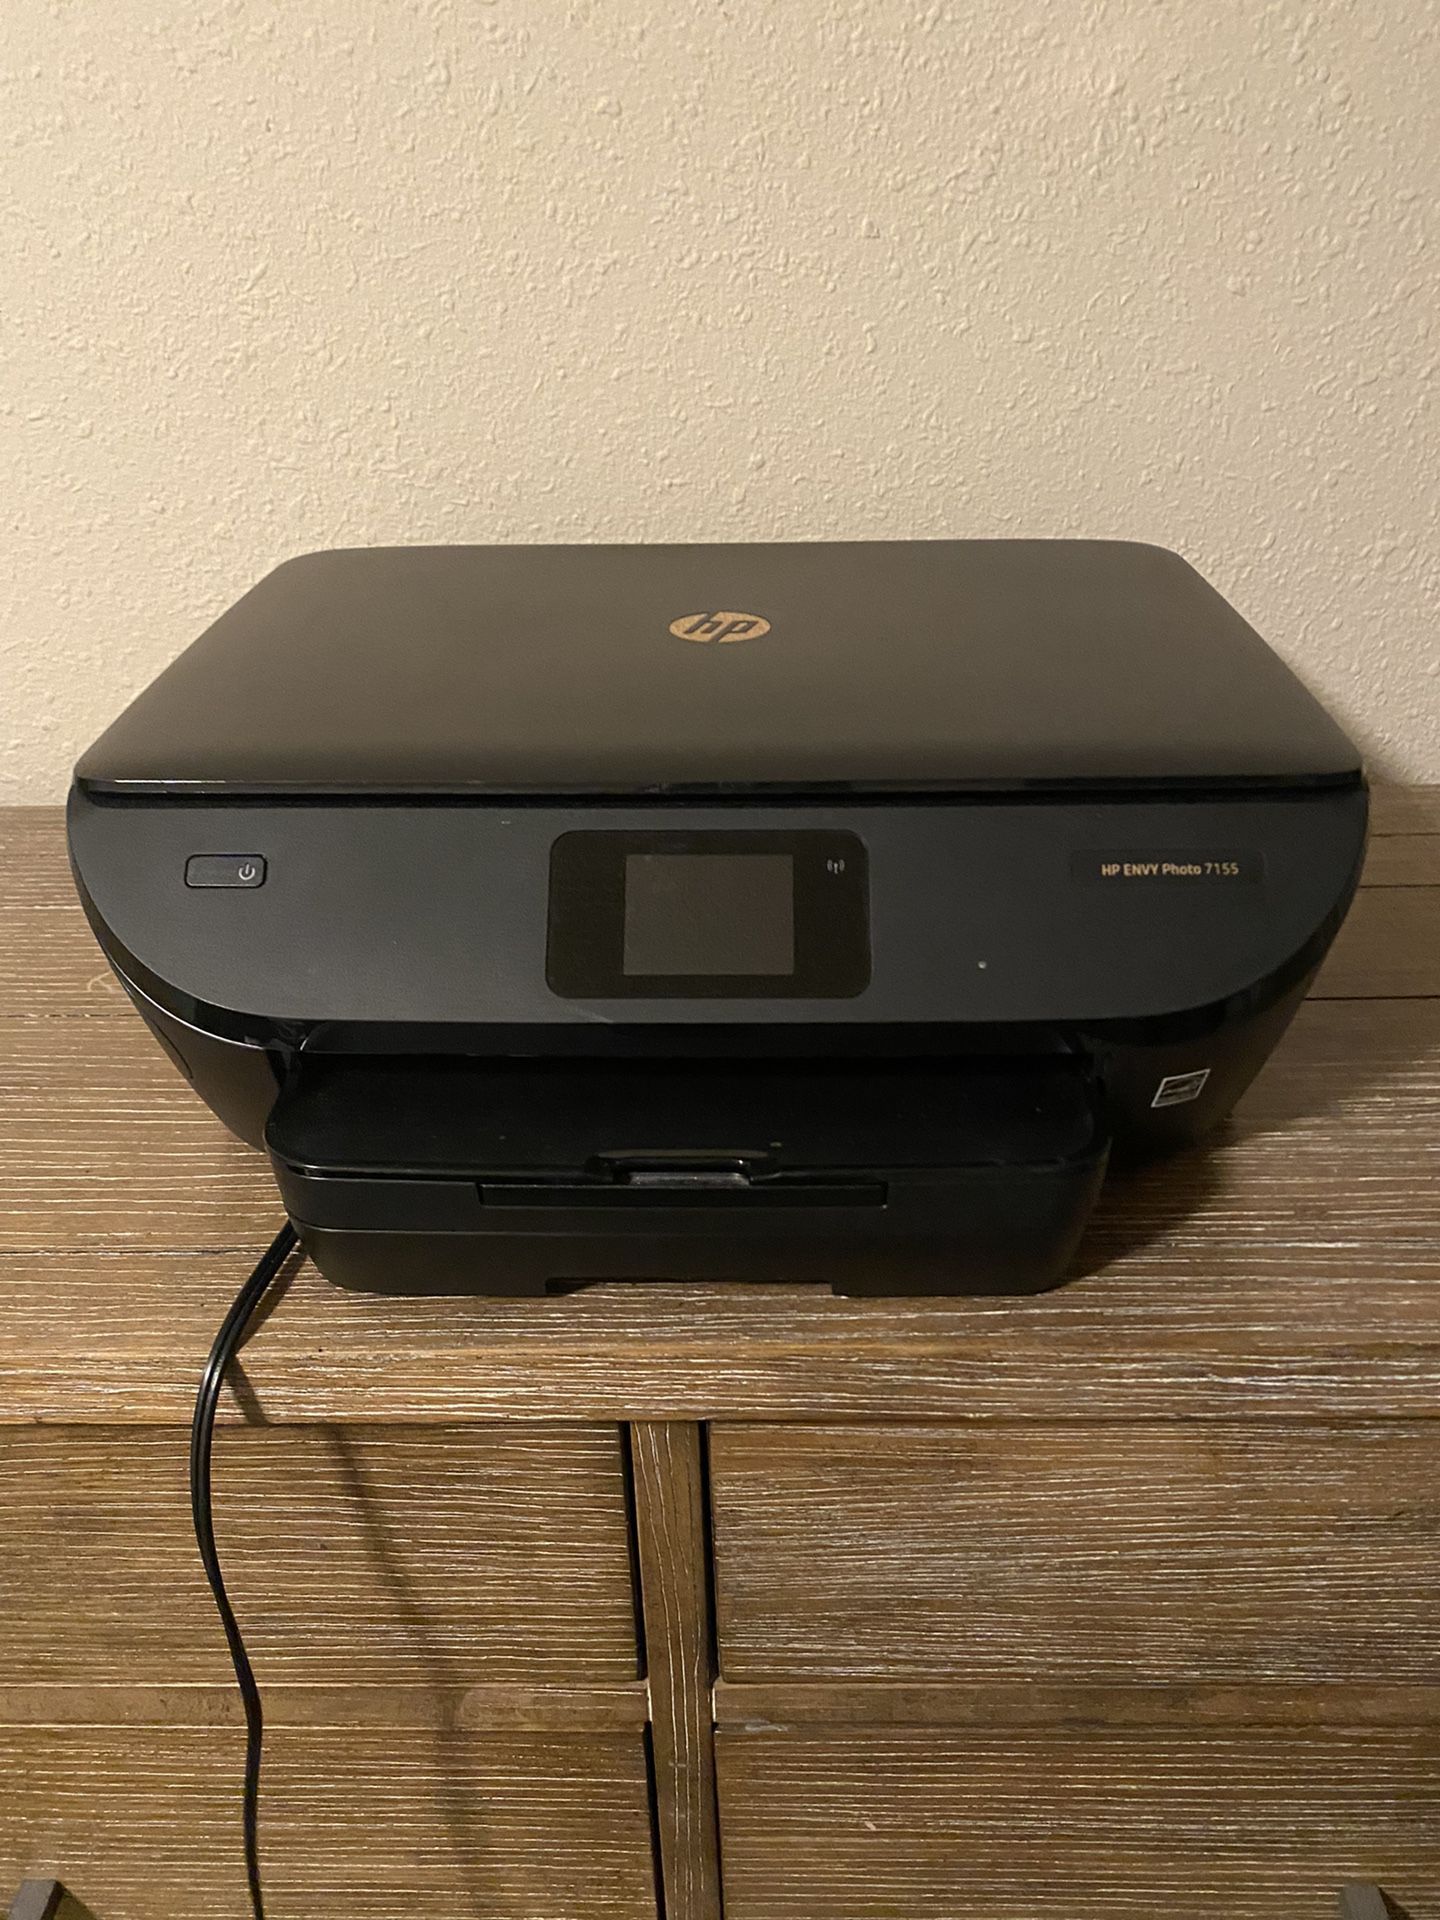 HP Printer, Works Great